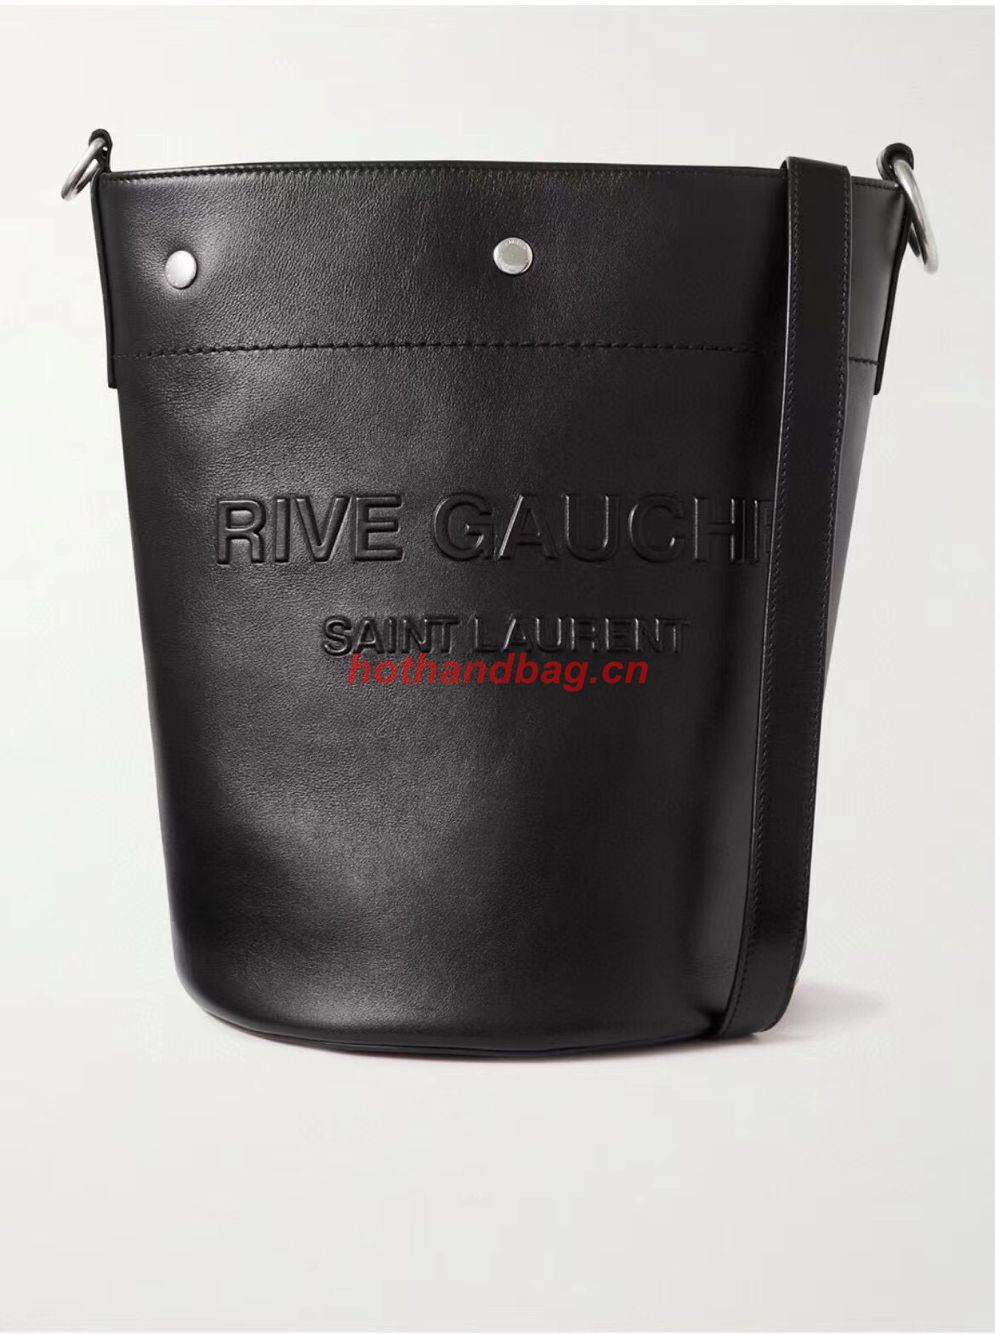 SAINT LAUREN RIVE GAUCHE BUCKET BAG IN SMOOTH LEATHER Y689299A black